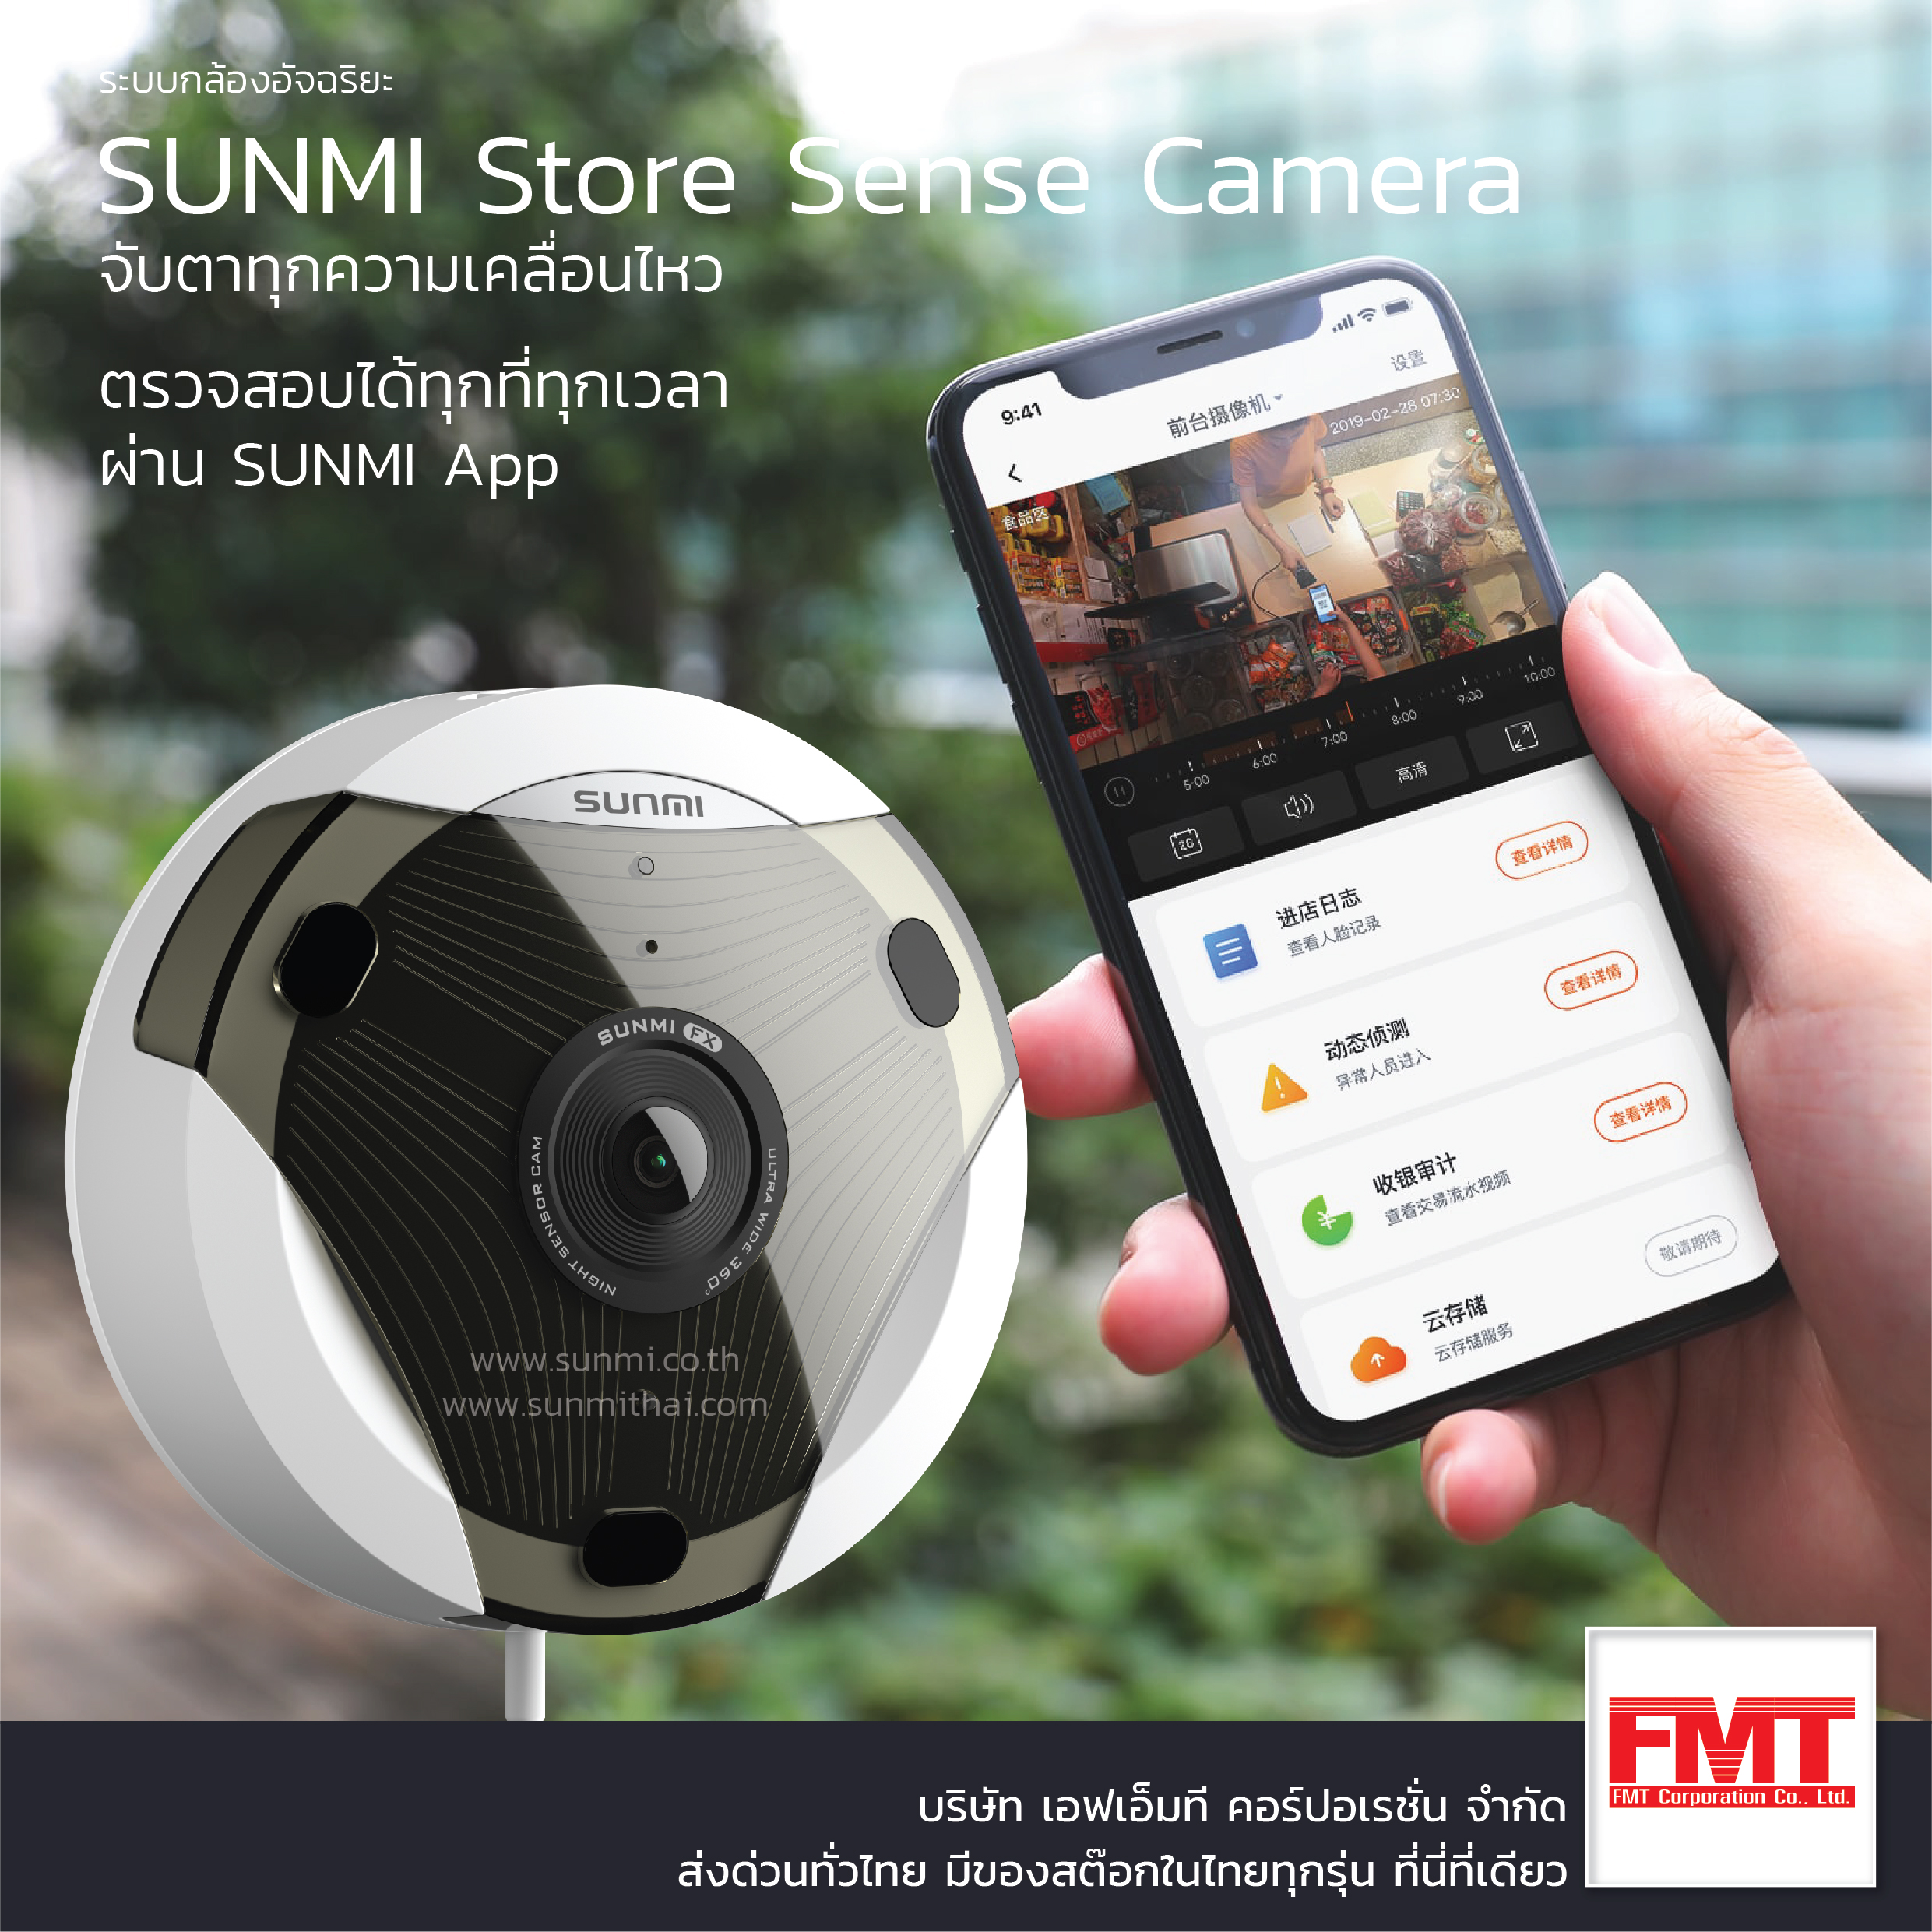 SUNMI Store Sense Camera